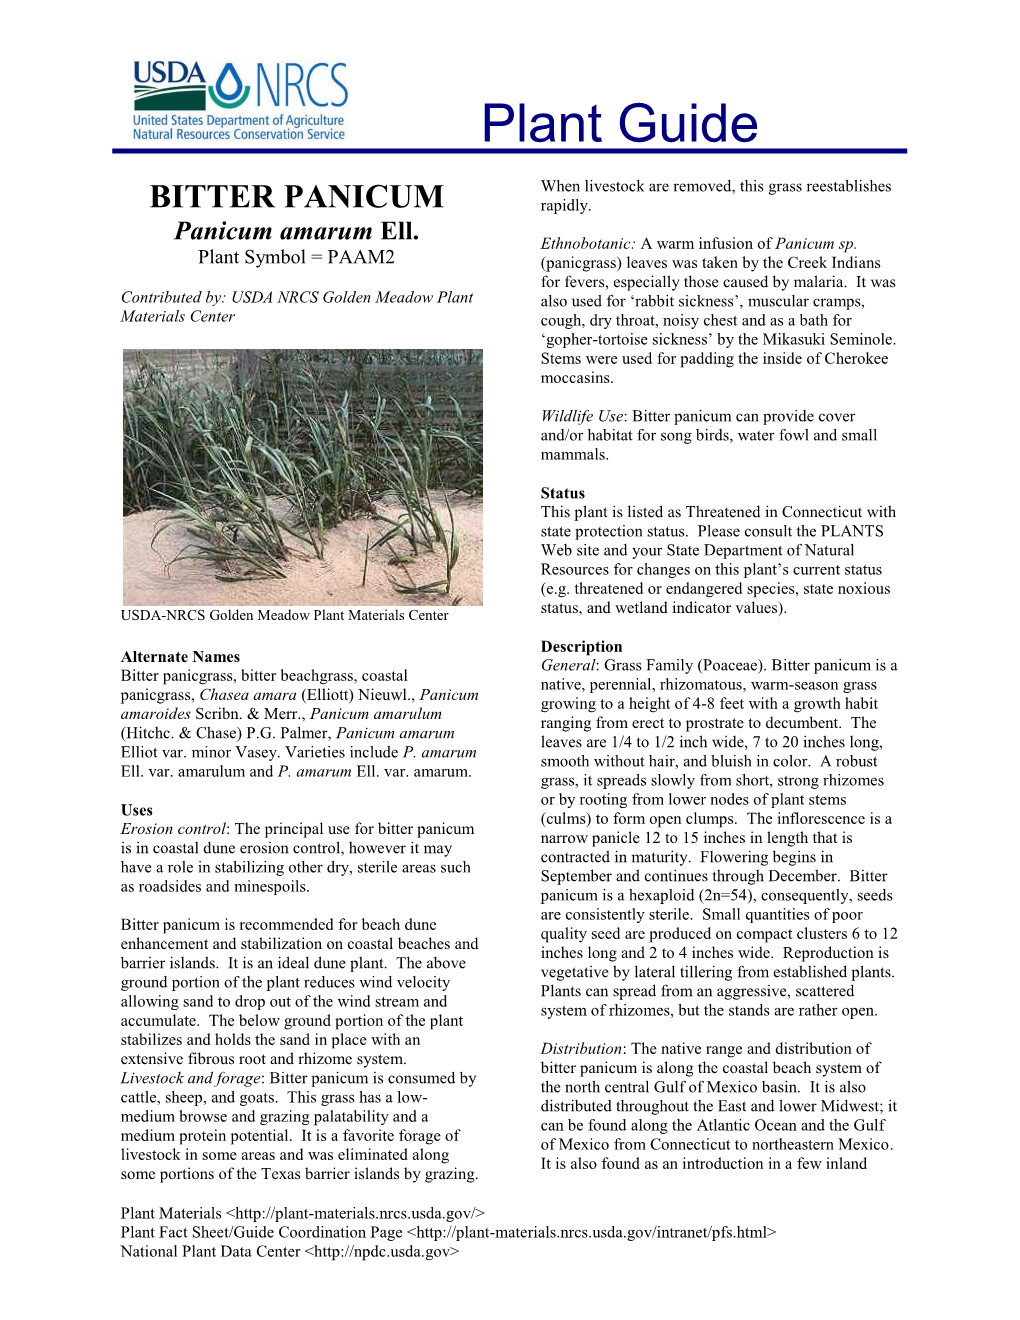 Plant Guide Bitter Panicum